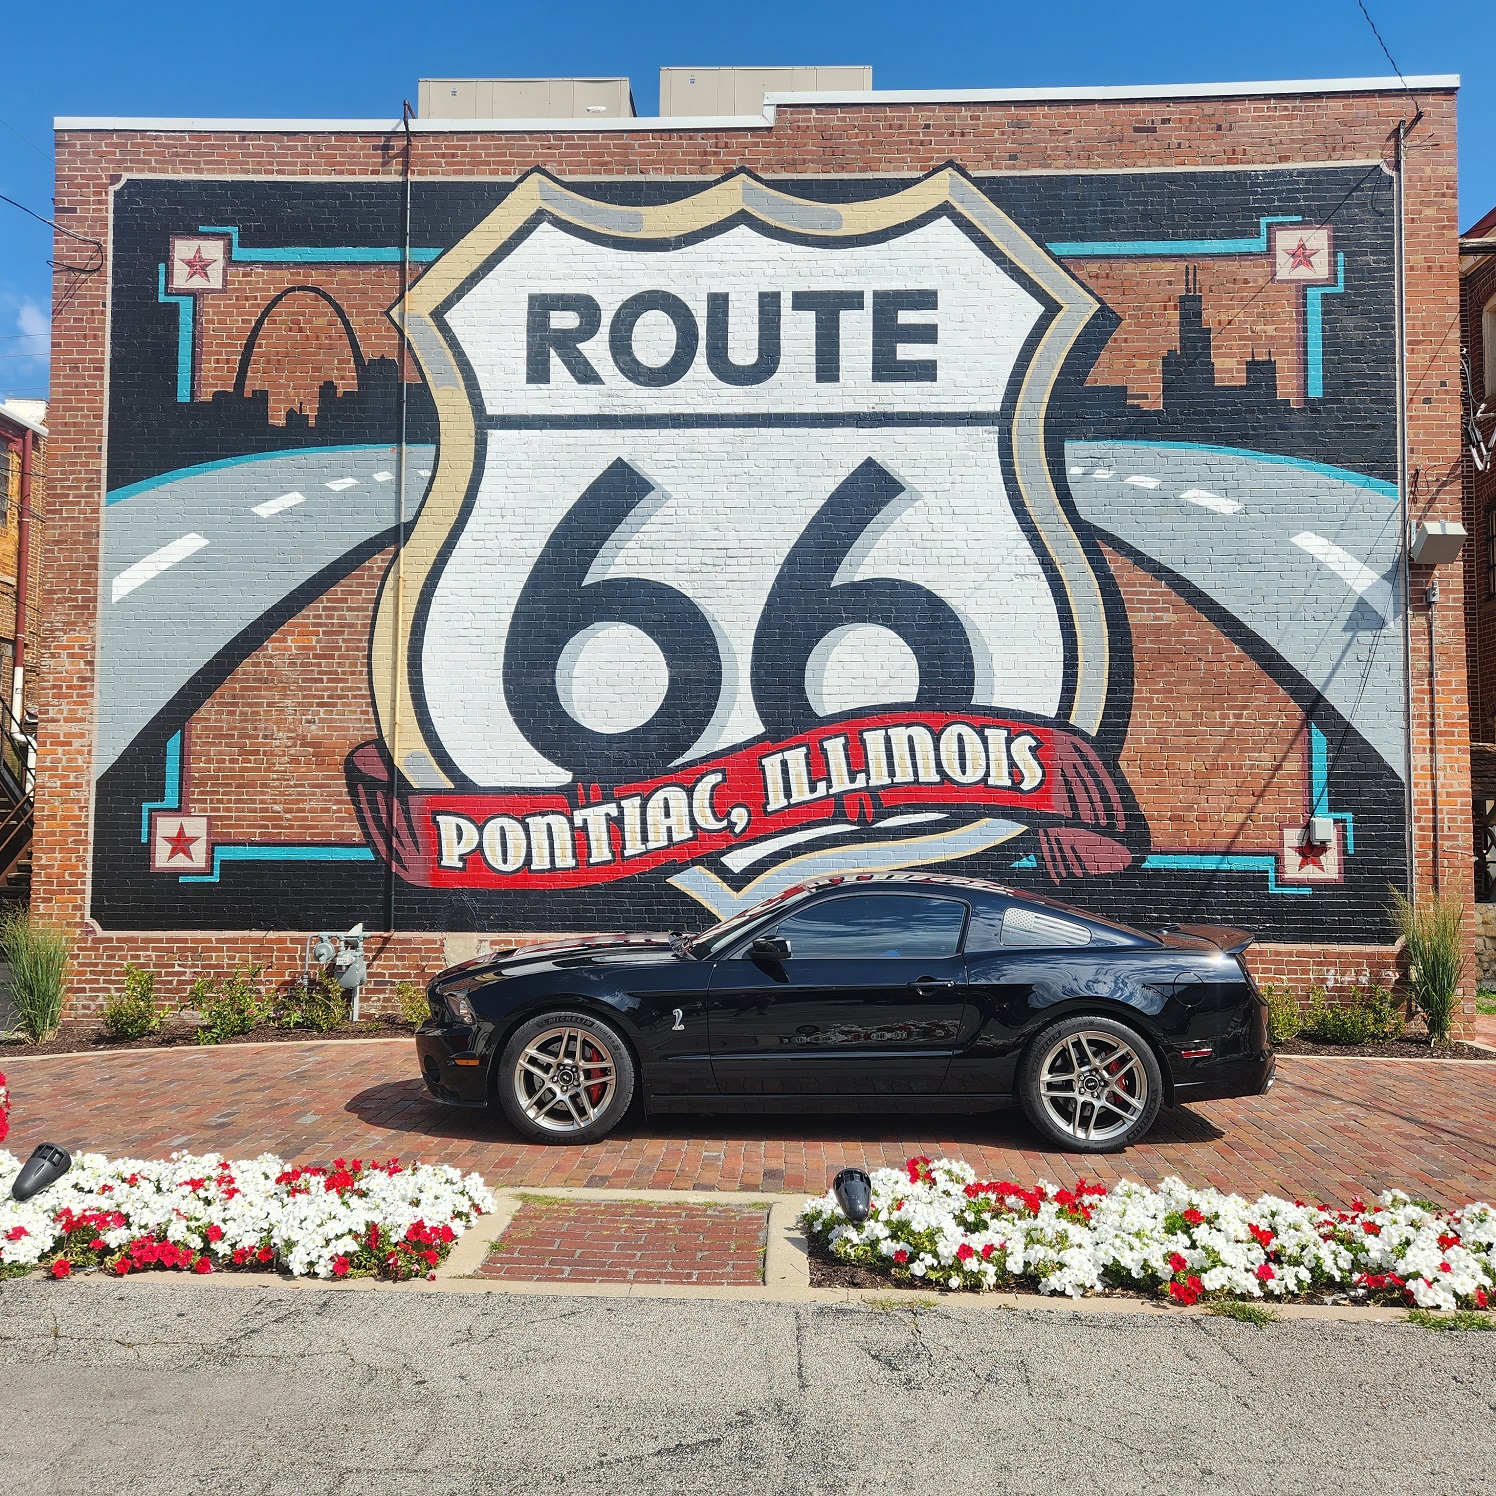 16 - Pontiac, IL.jpg